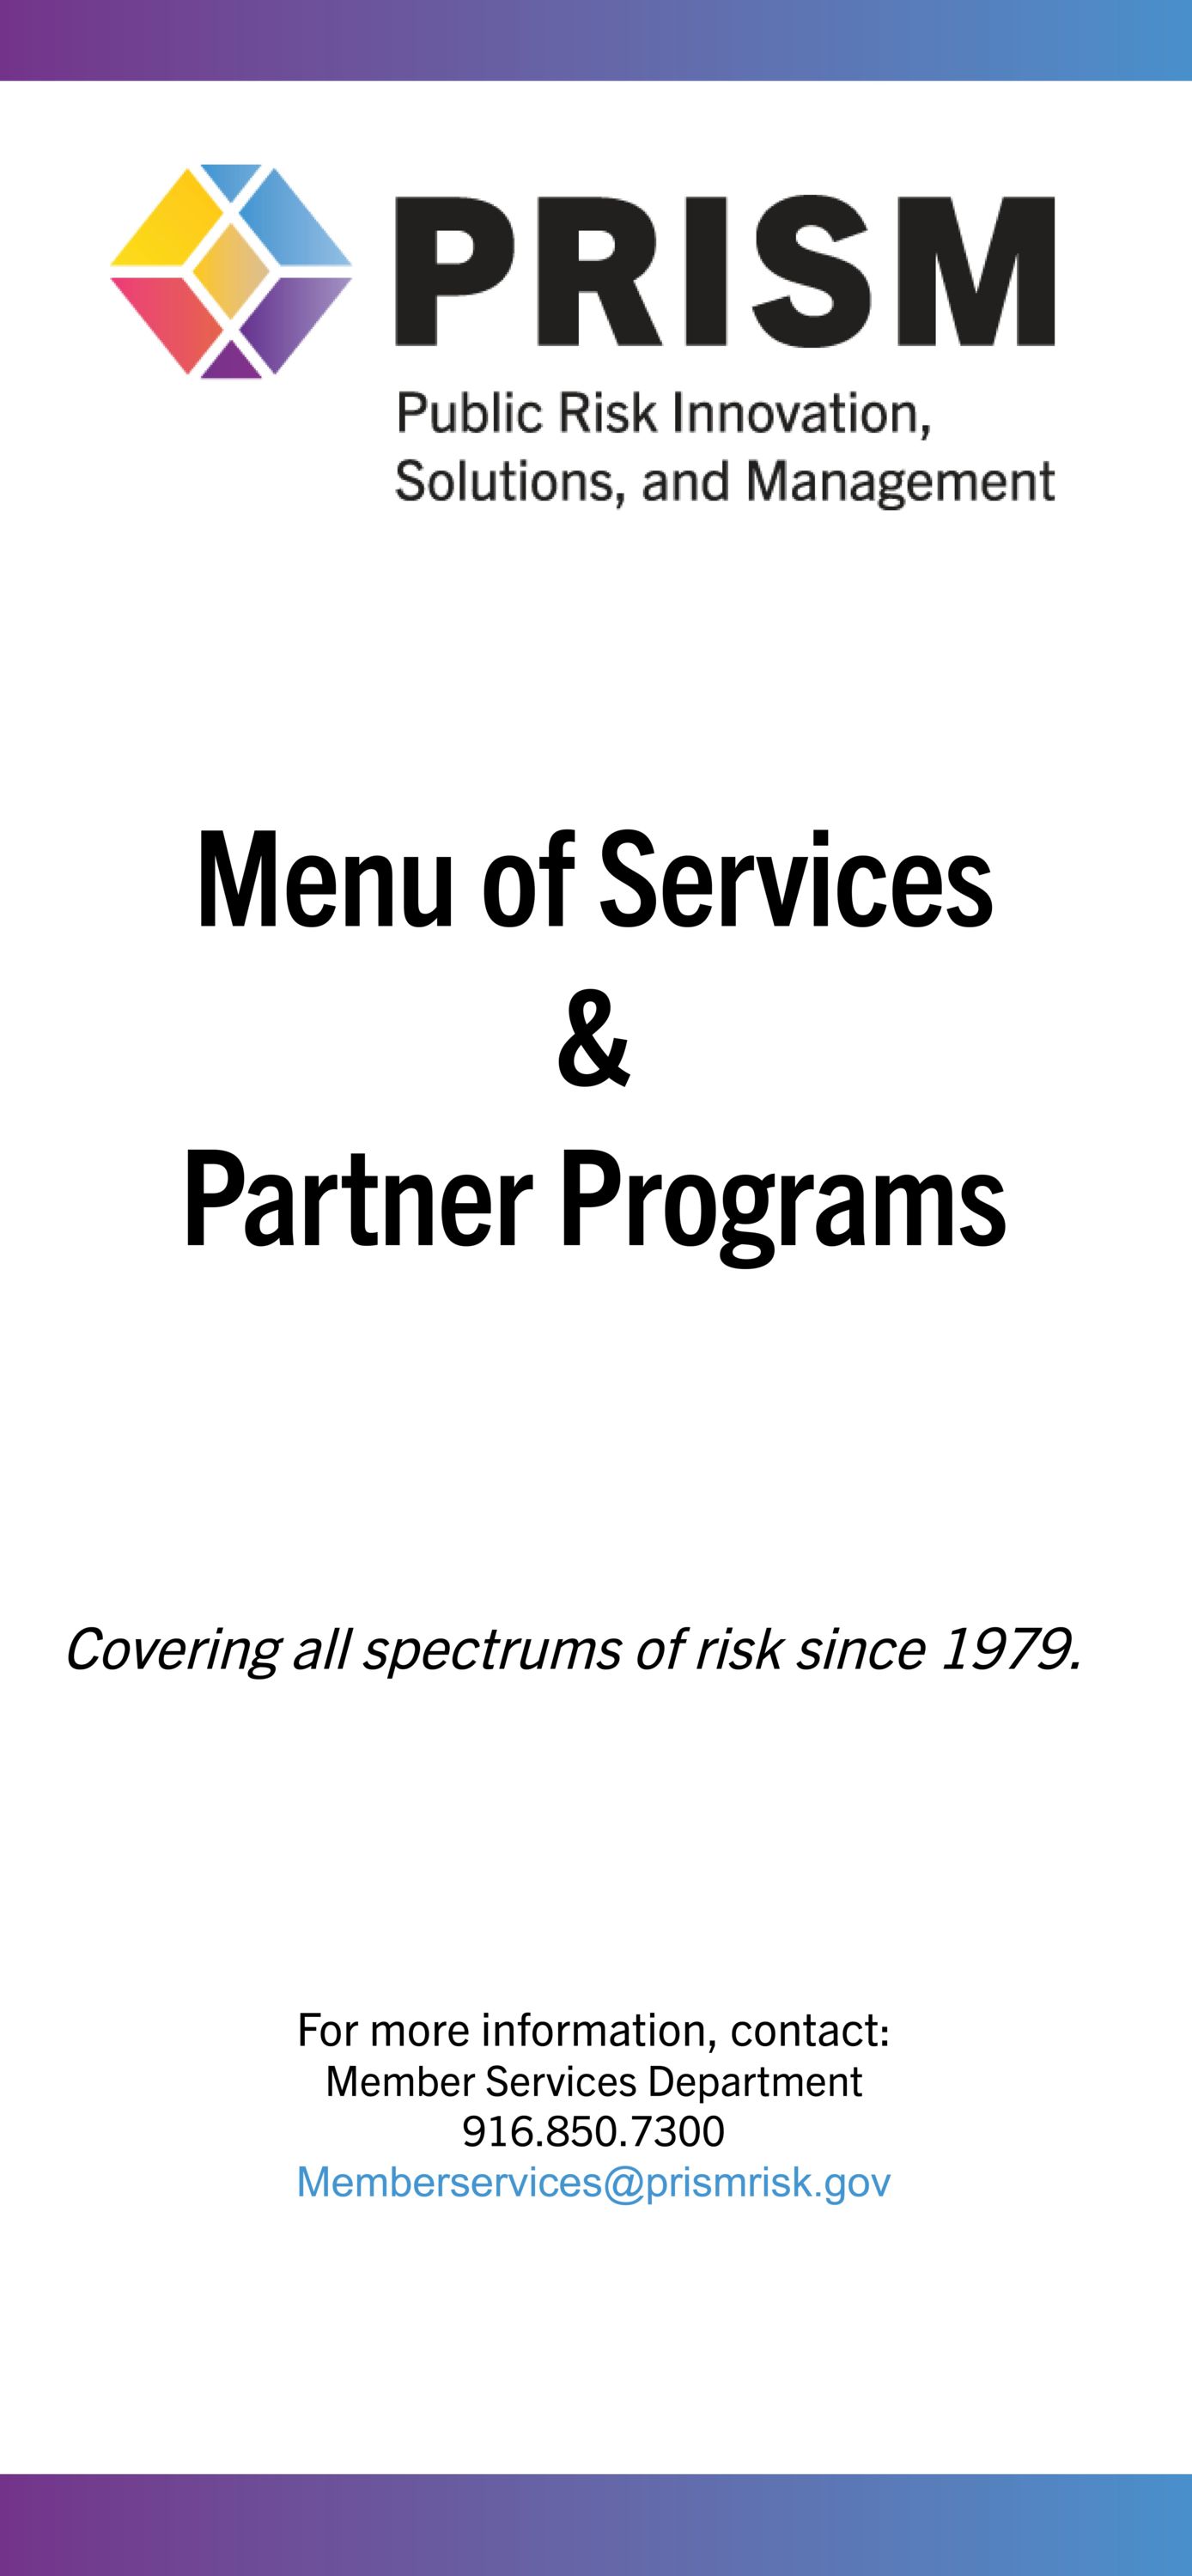 PRISM Menu of Services